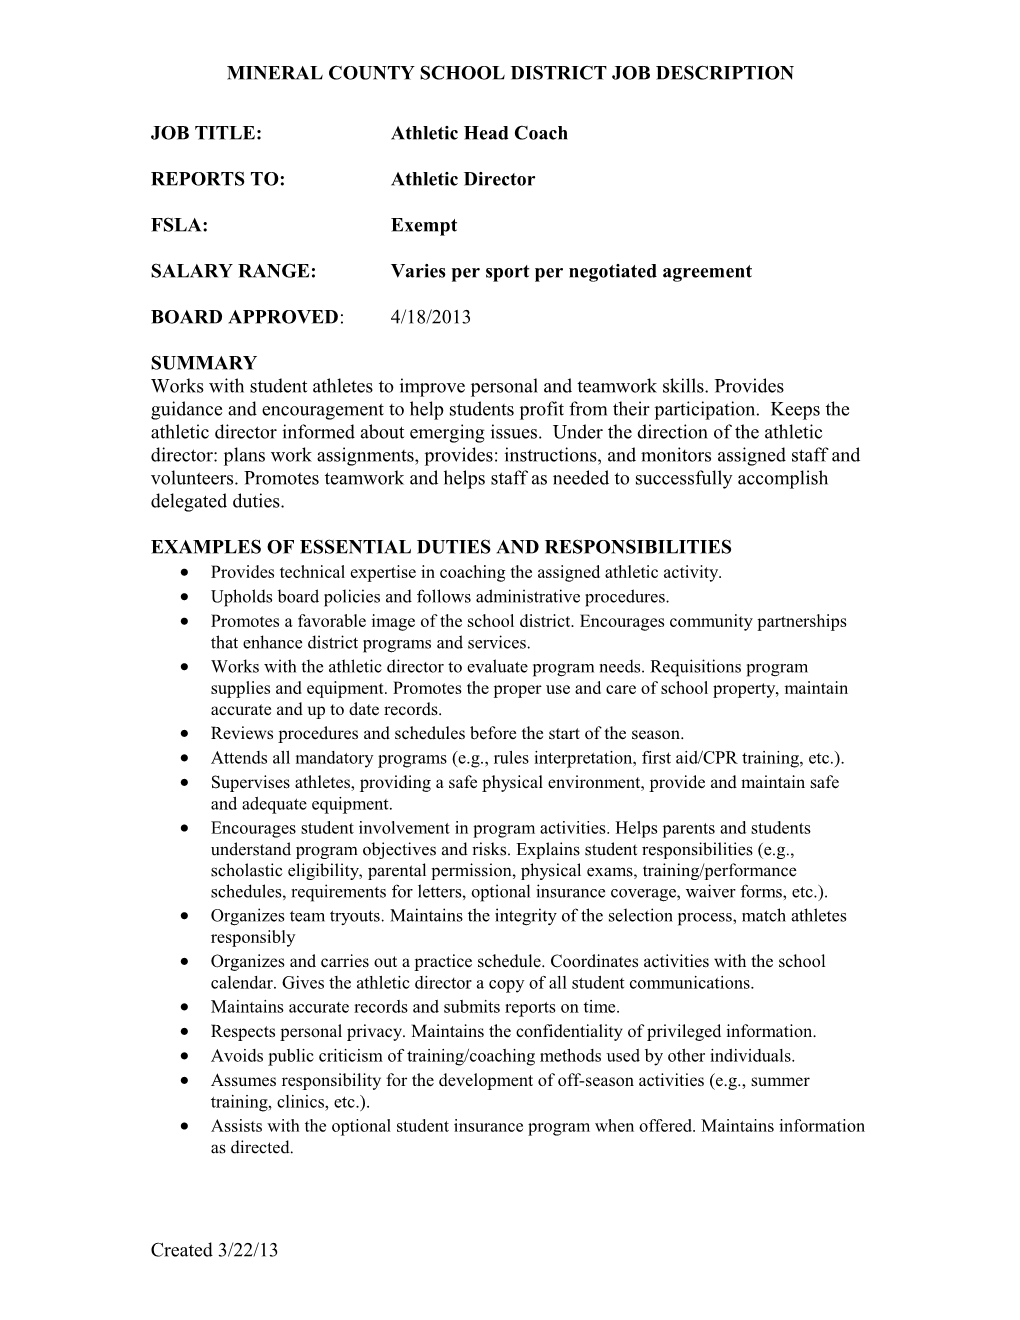 Mineralcountyschool District Job Description